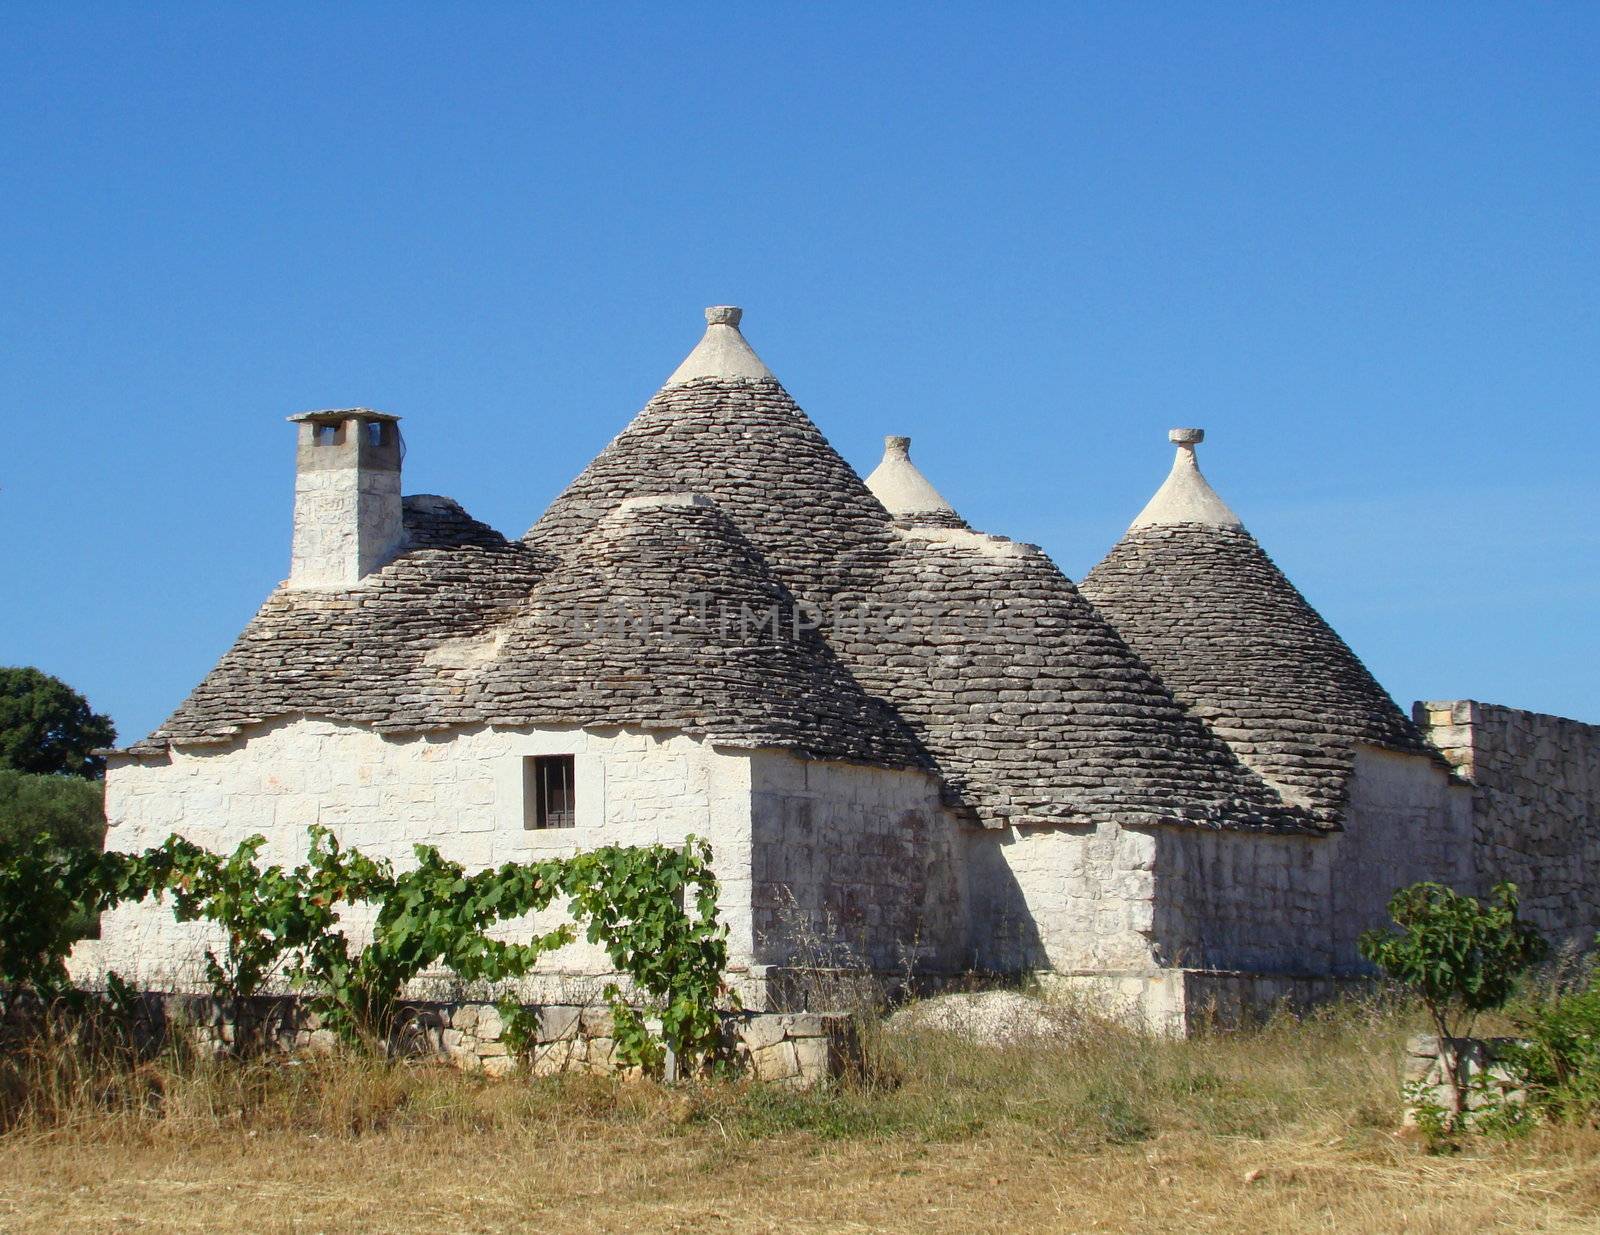 trullo house in Apulia, region in Italy. Trulli are local,traditional Apulian stone dwelling with a conical roof. They may be found in the towns of Alberobello, Locorotondo, Fasano, Cisternino, Martina Franca and Ceglie Messapica.